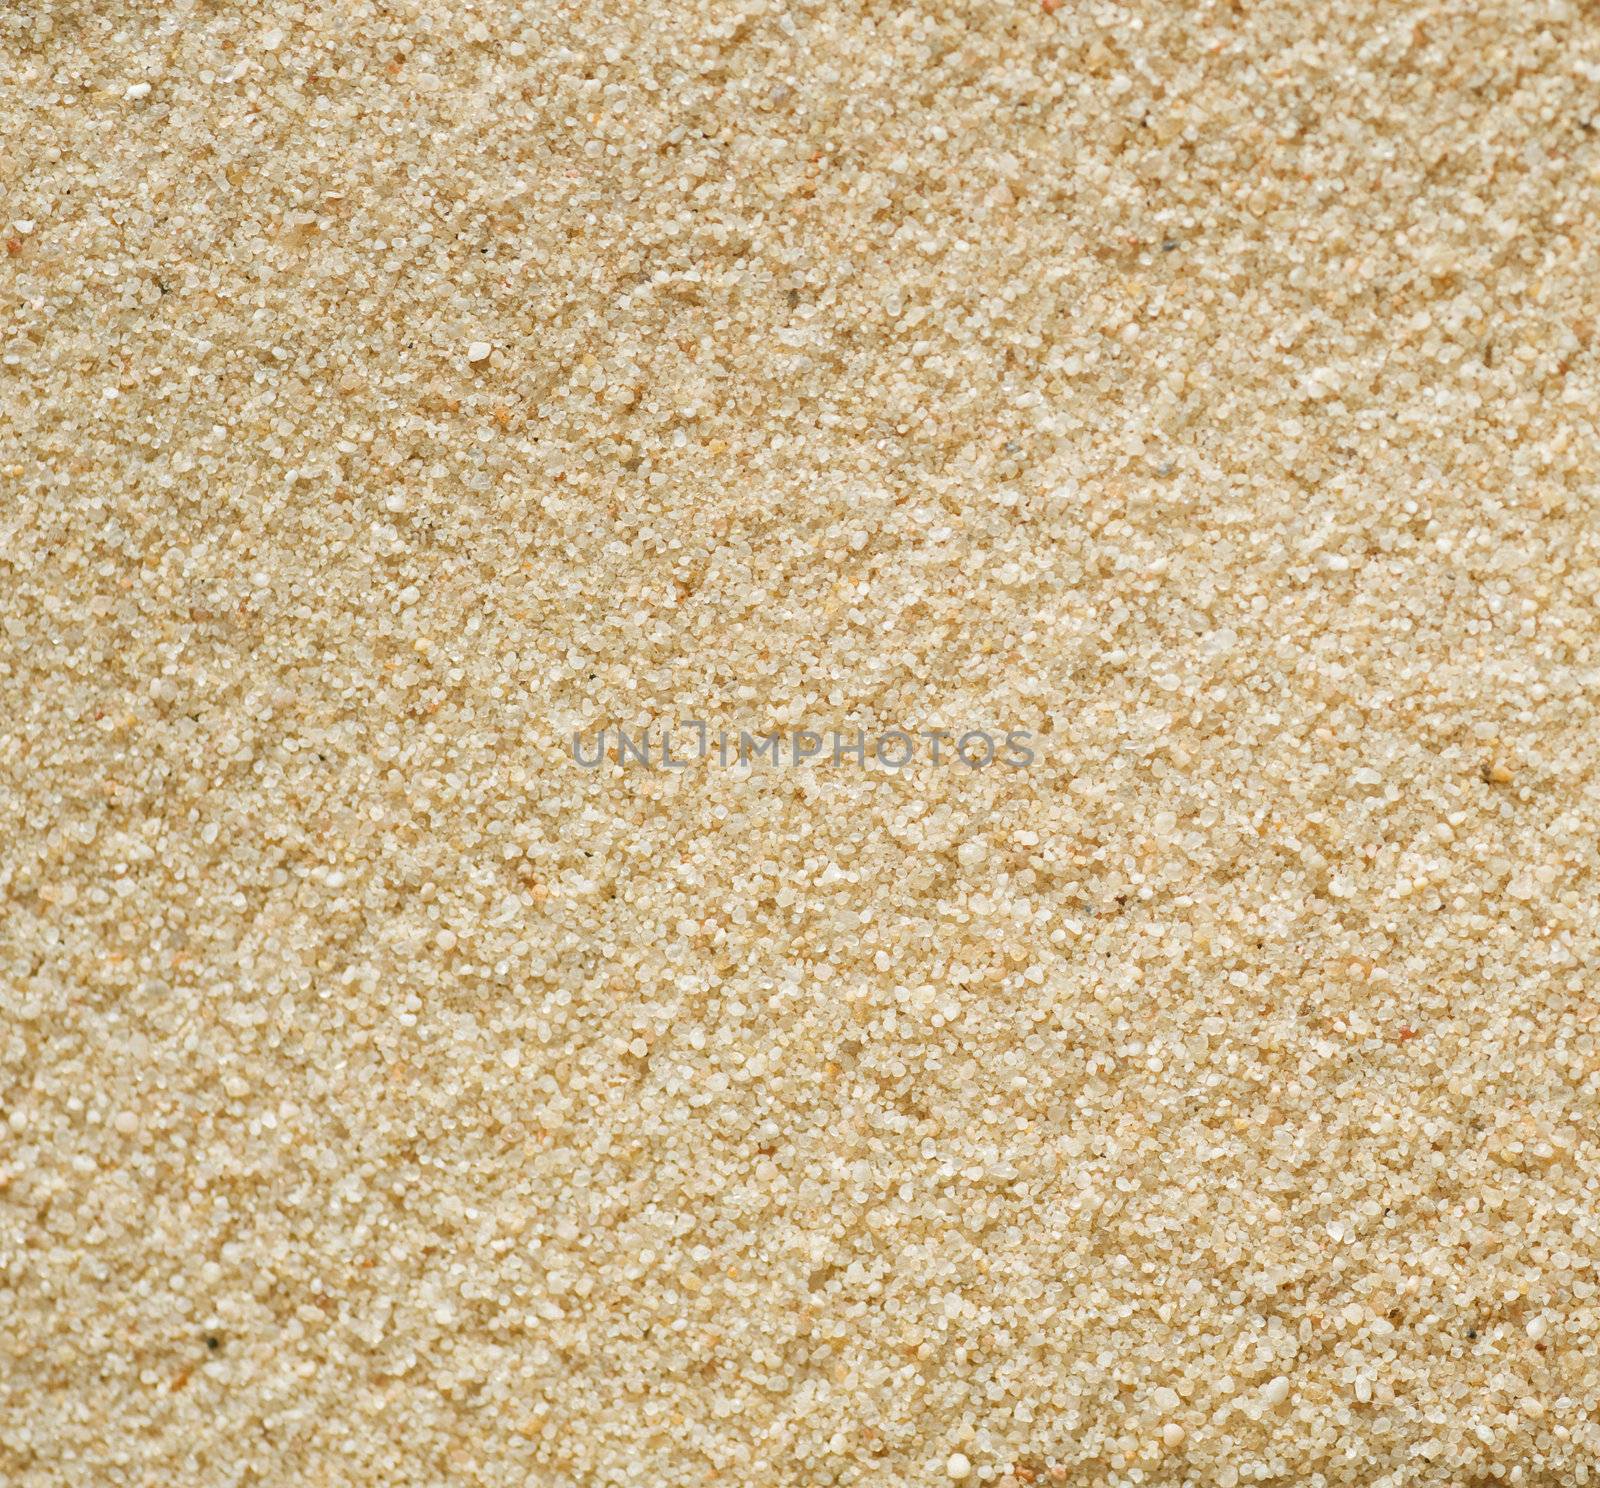 Sand Texture by SubbotinaA